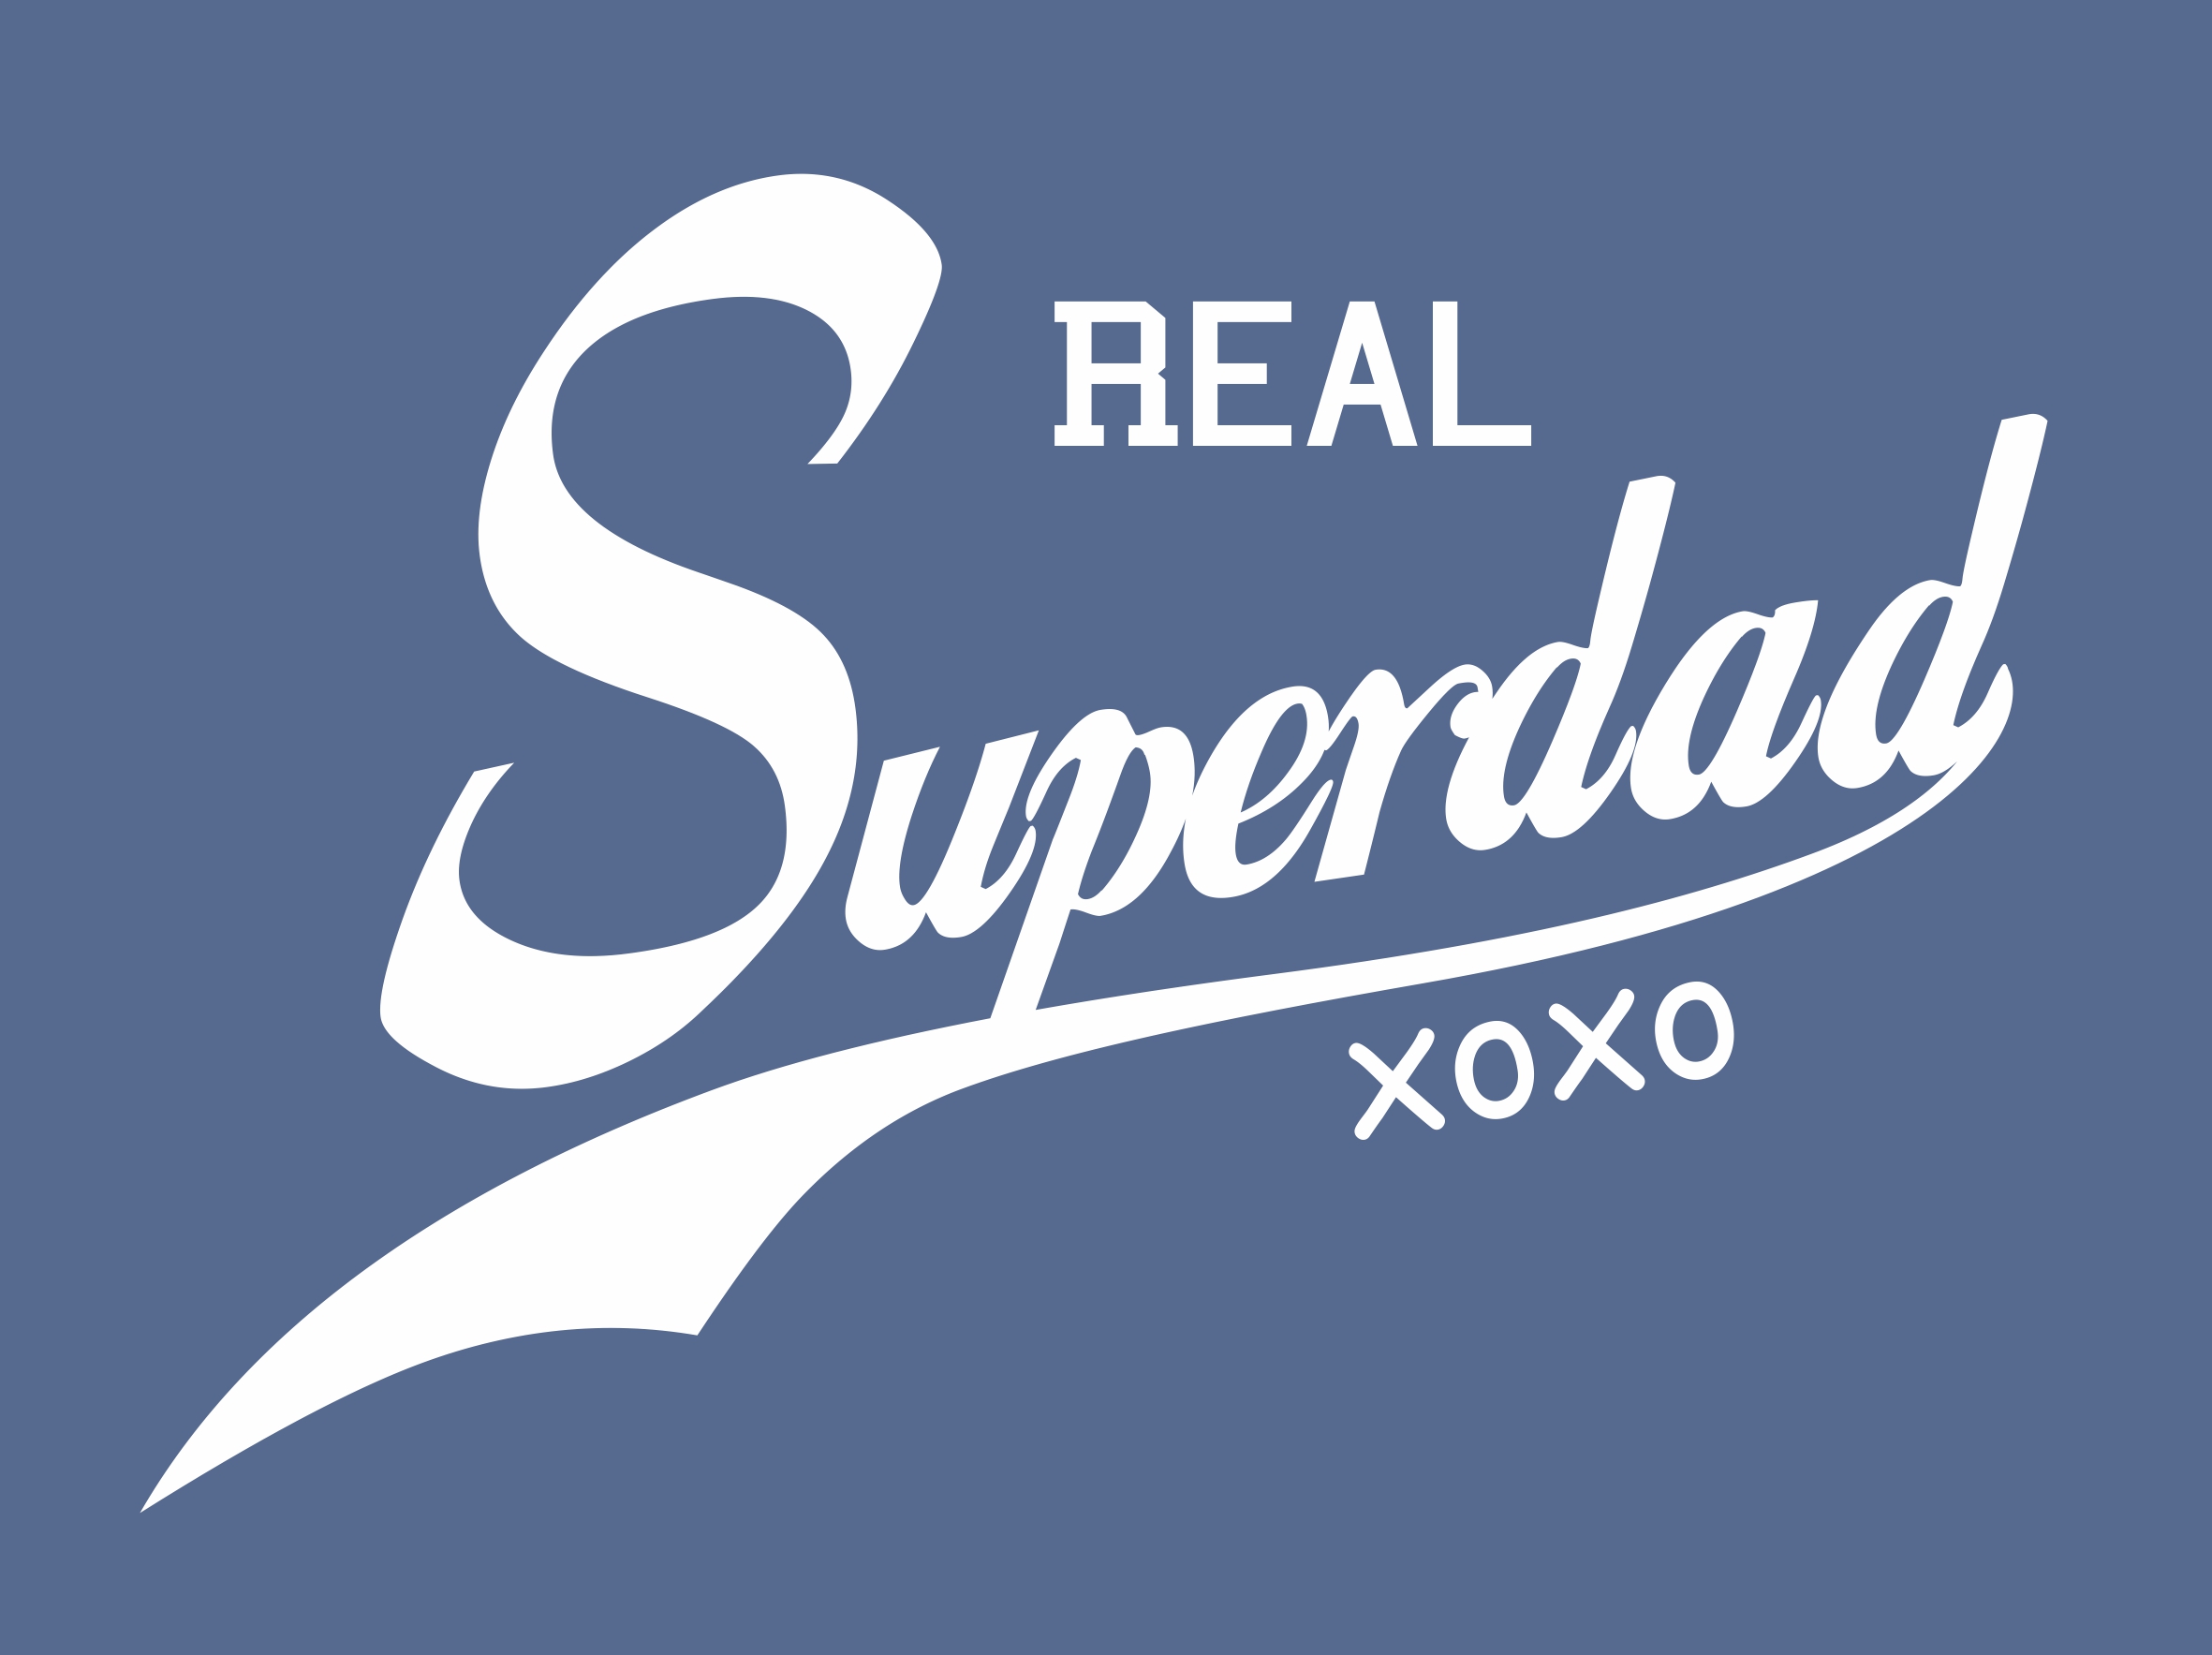 real superdad